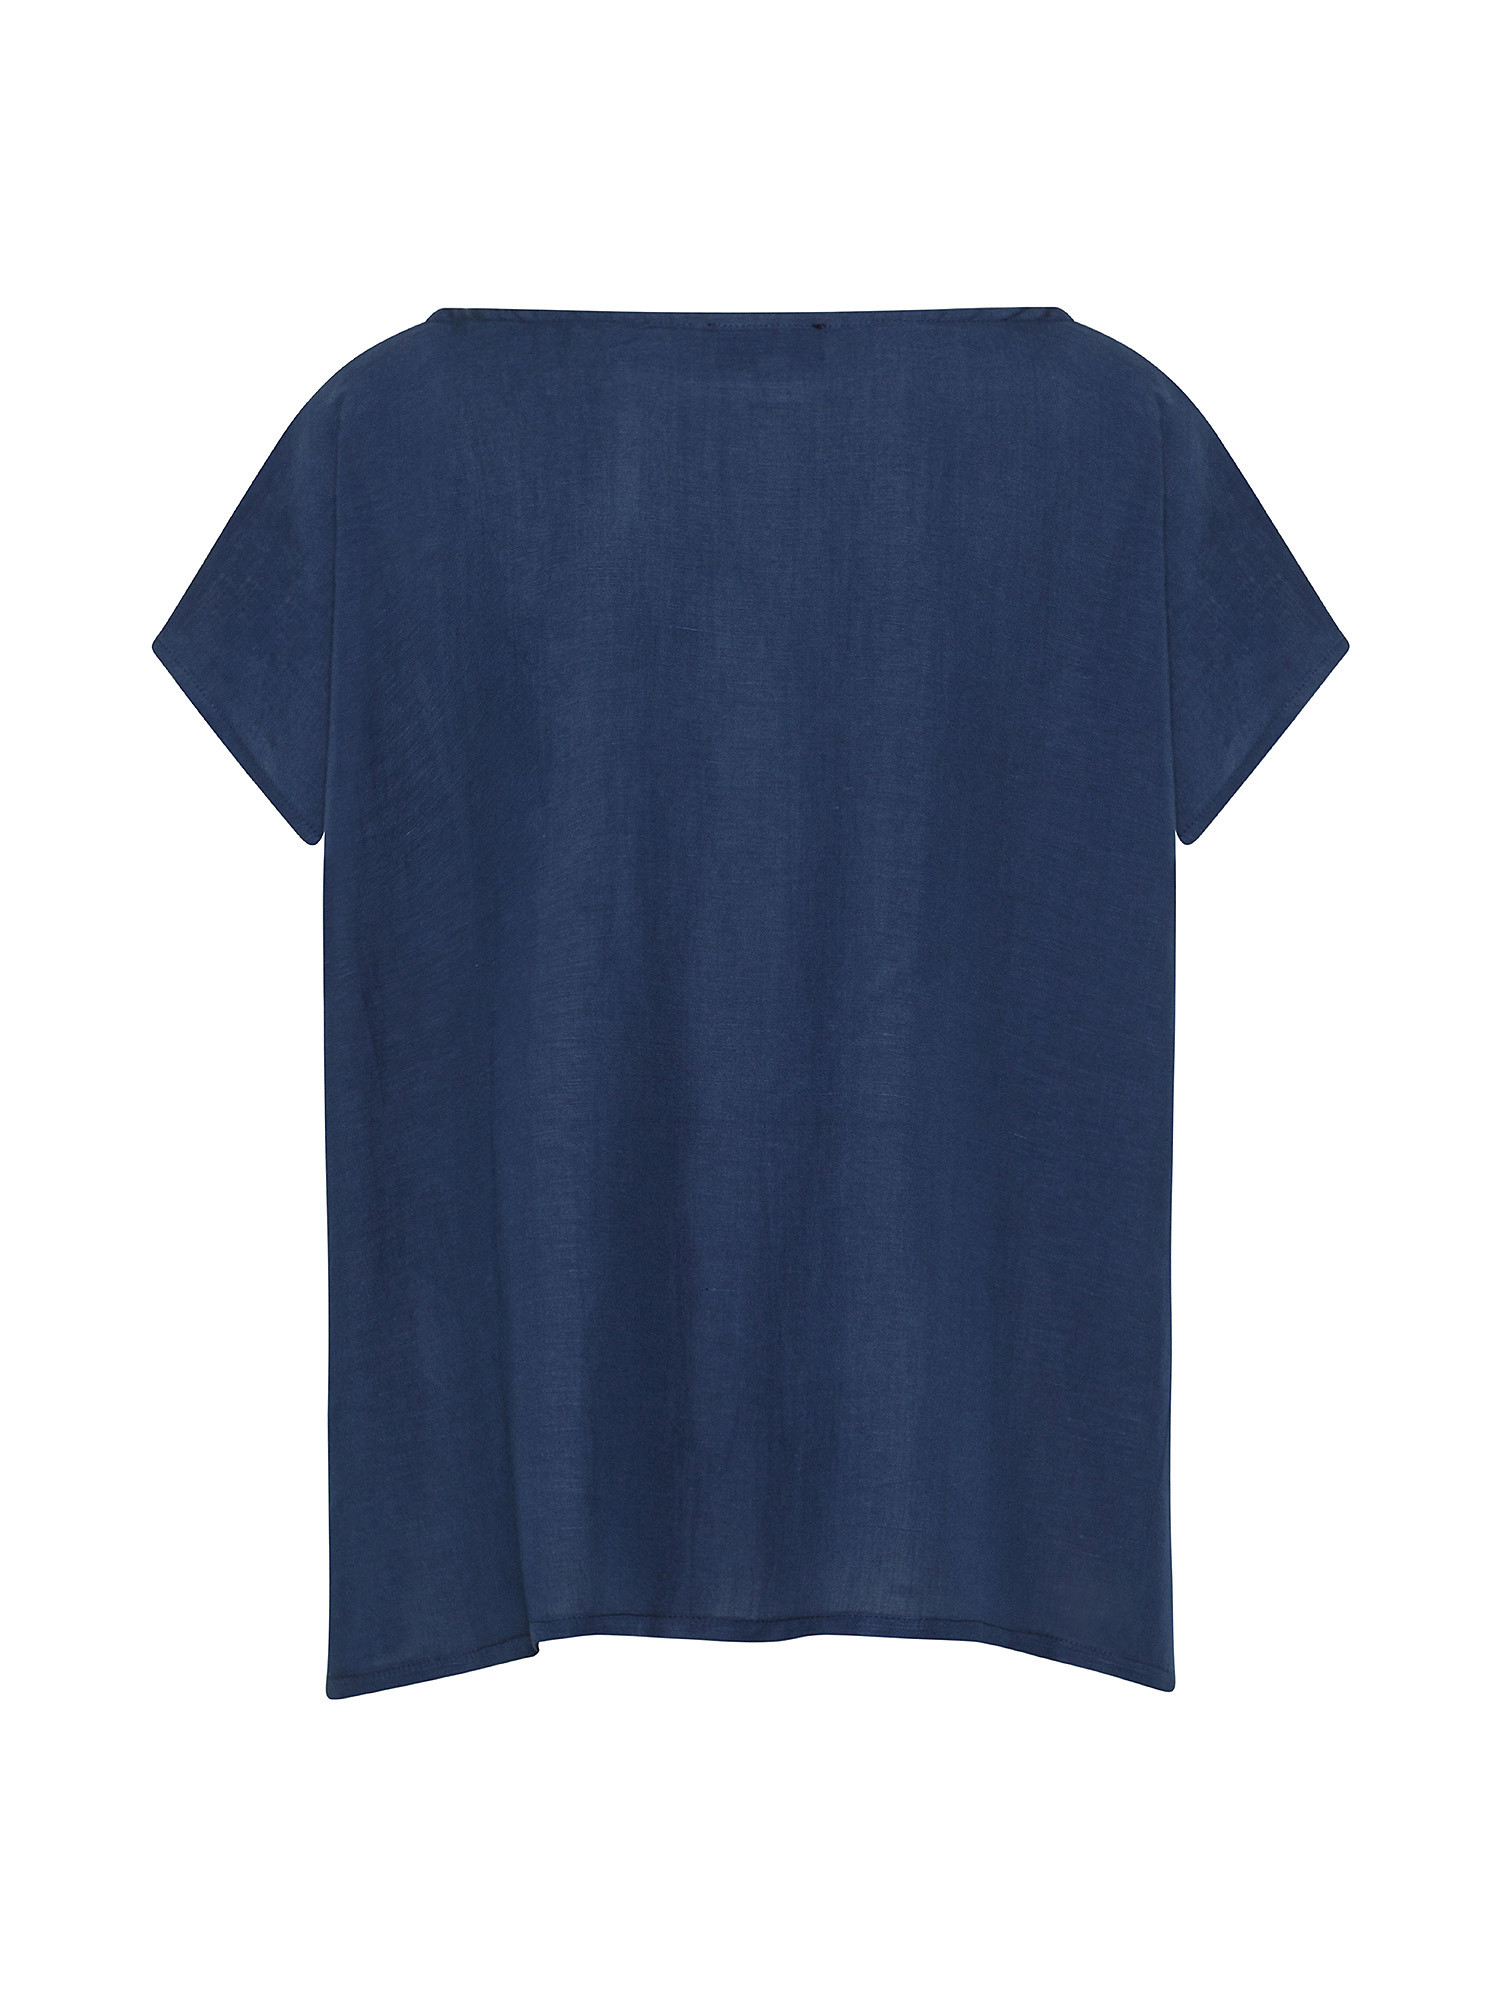 Camicia, Blu, large image number 1